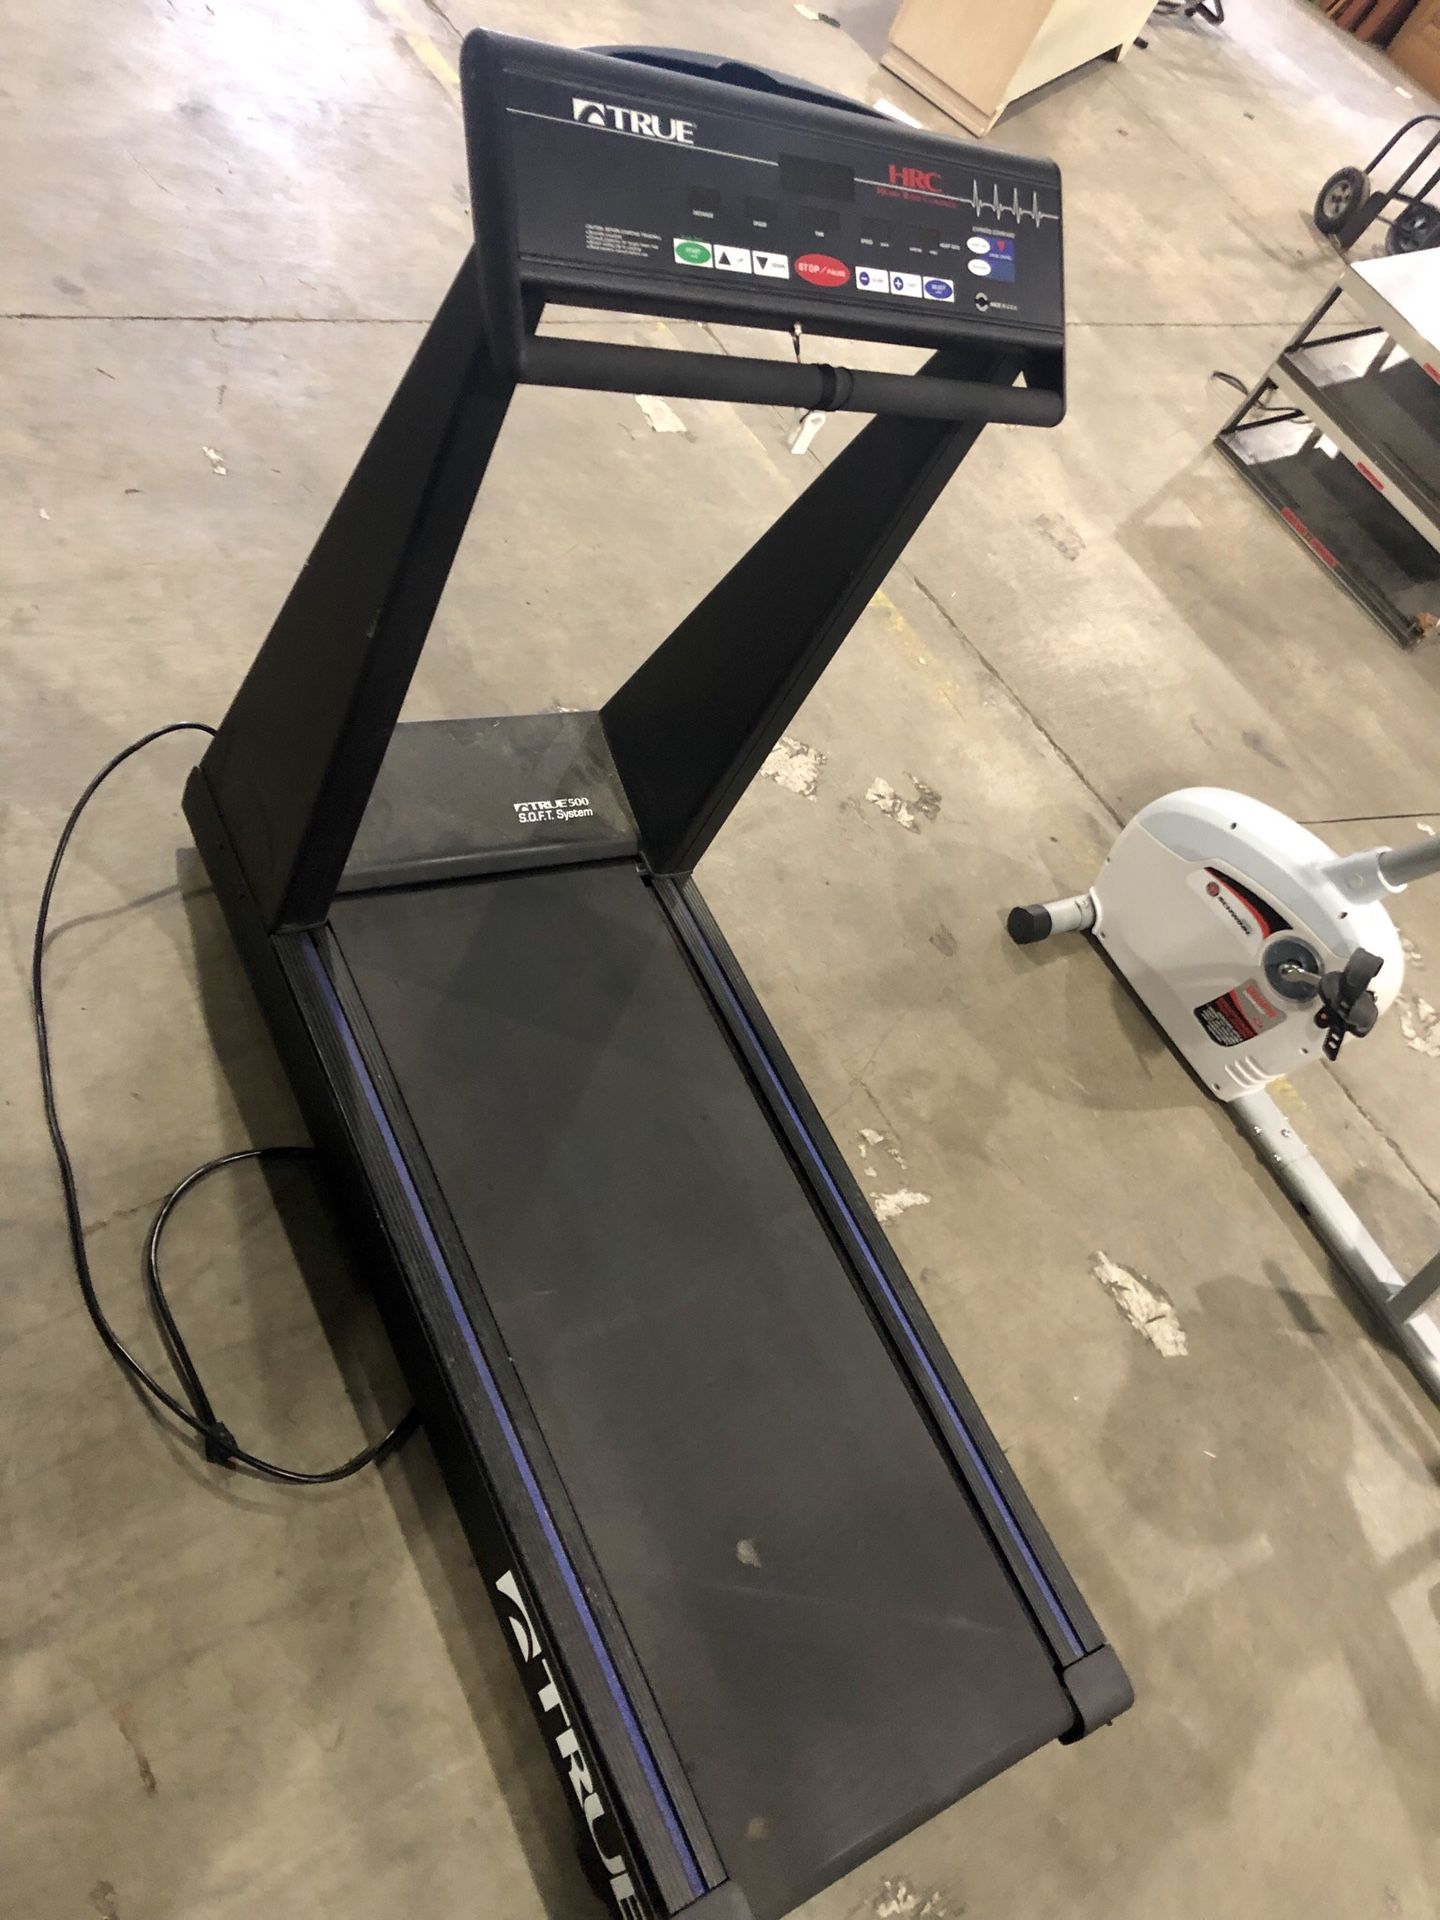 True treadmill hrc 500